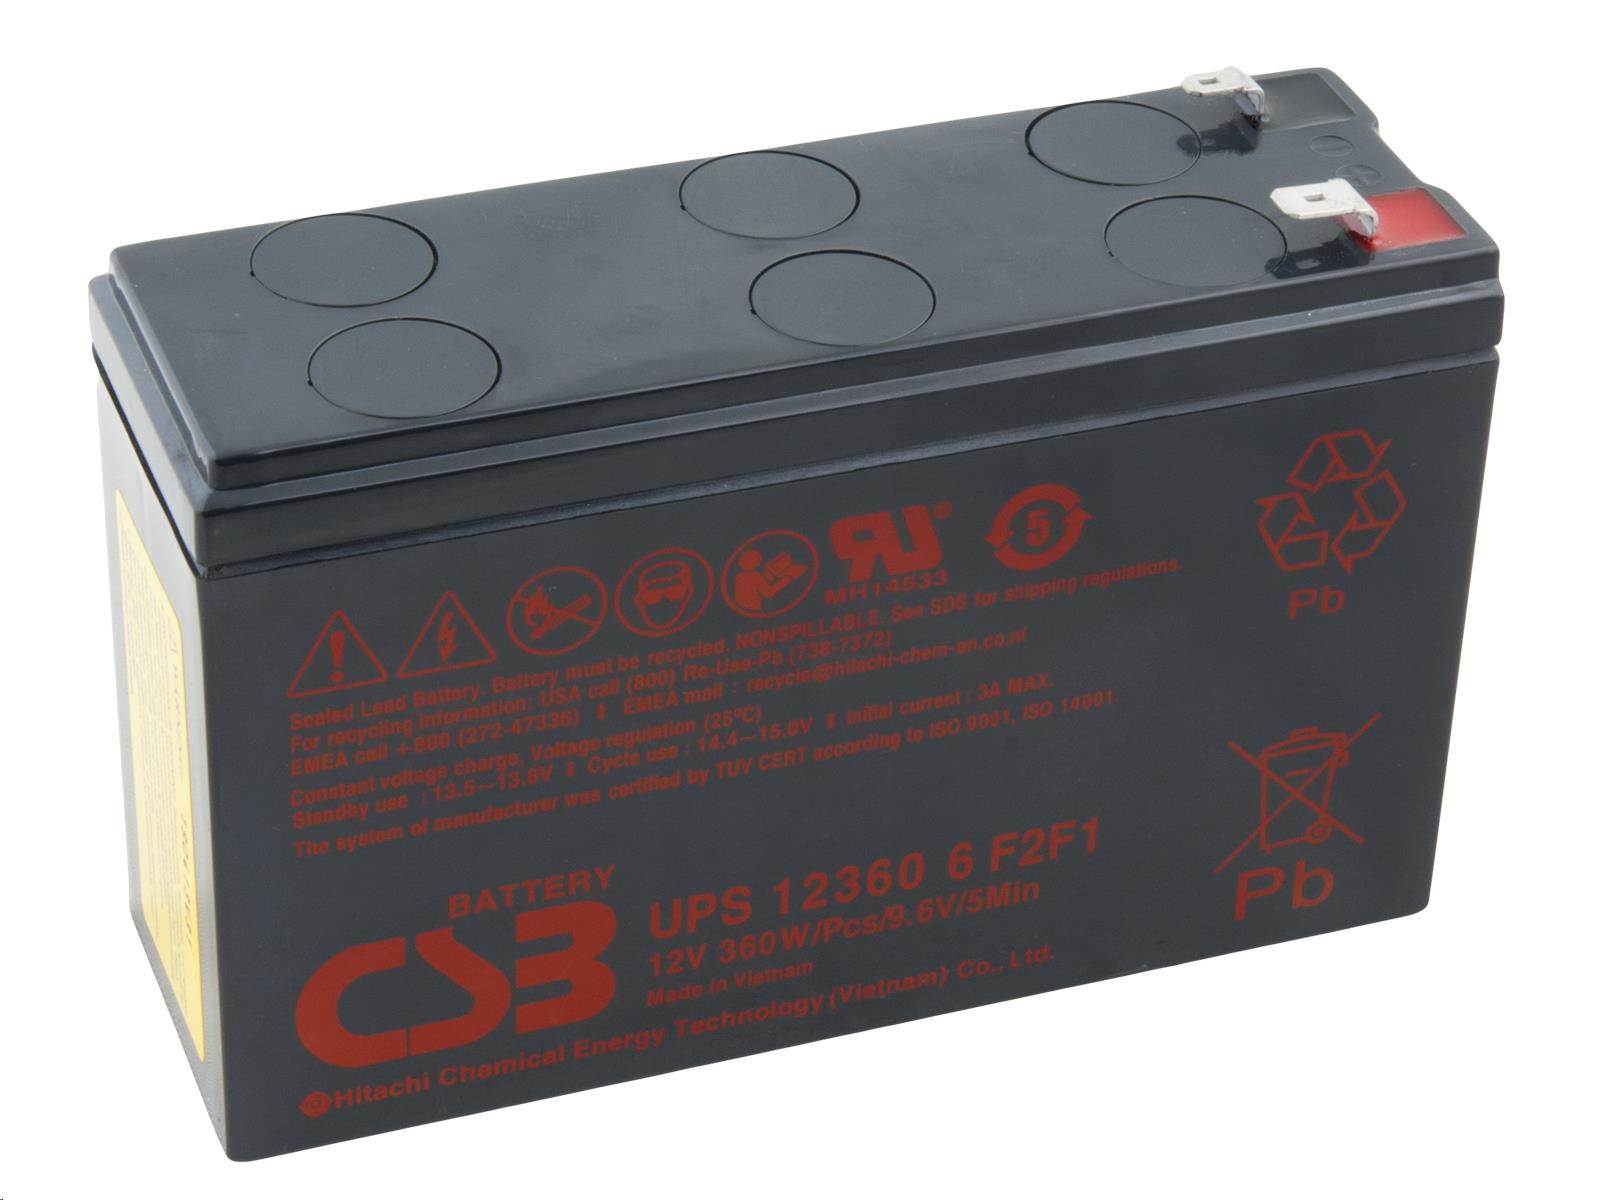 CSB batéria 12V 7Ah F1F2 HighRate (UPS 123606)0 